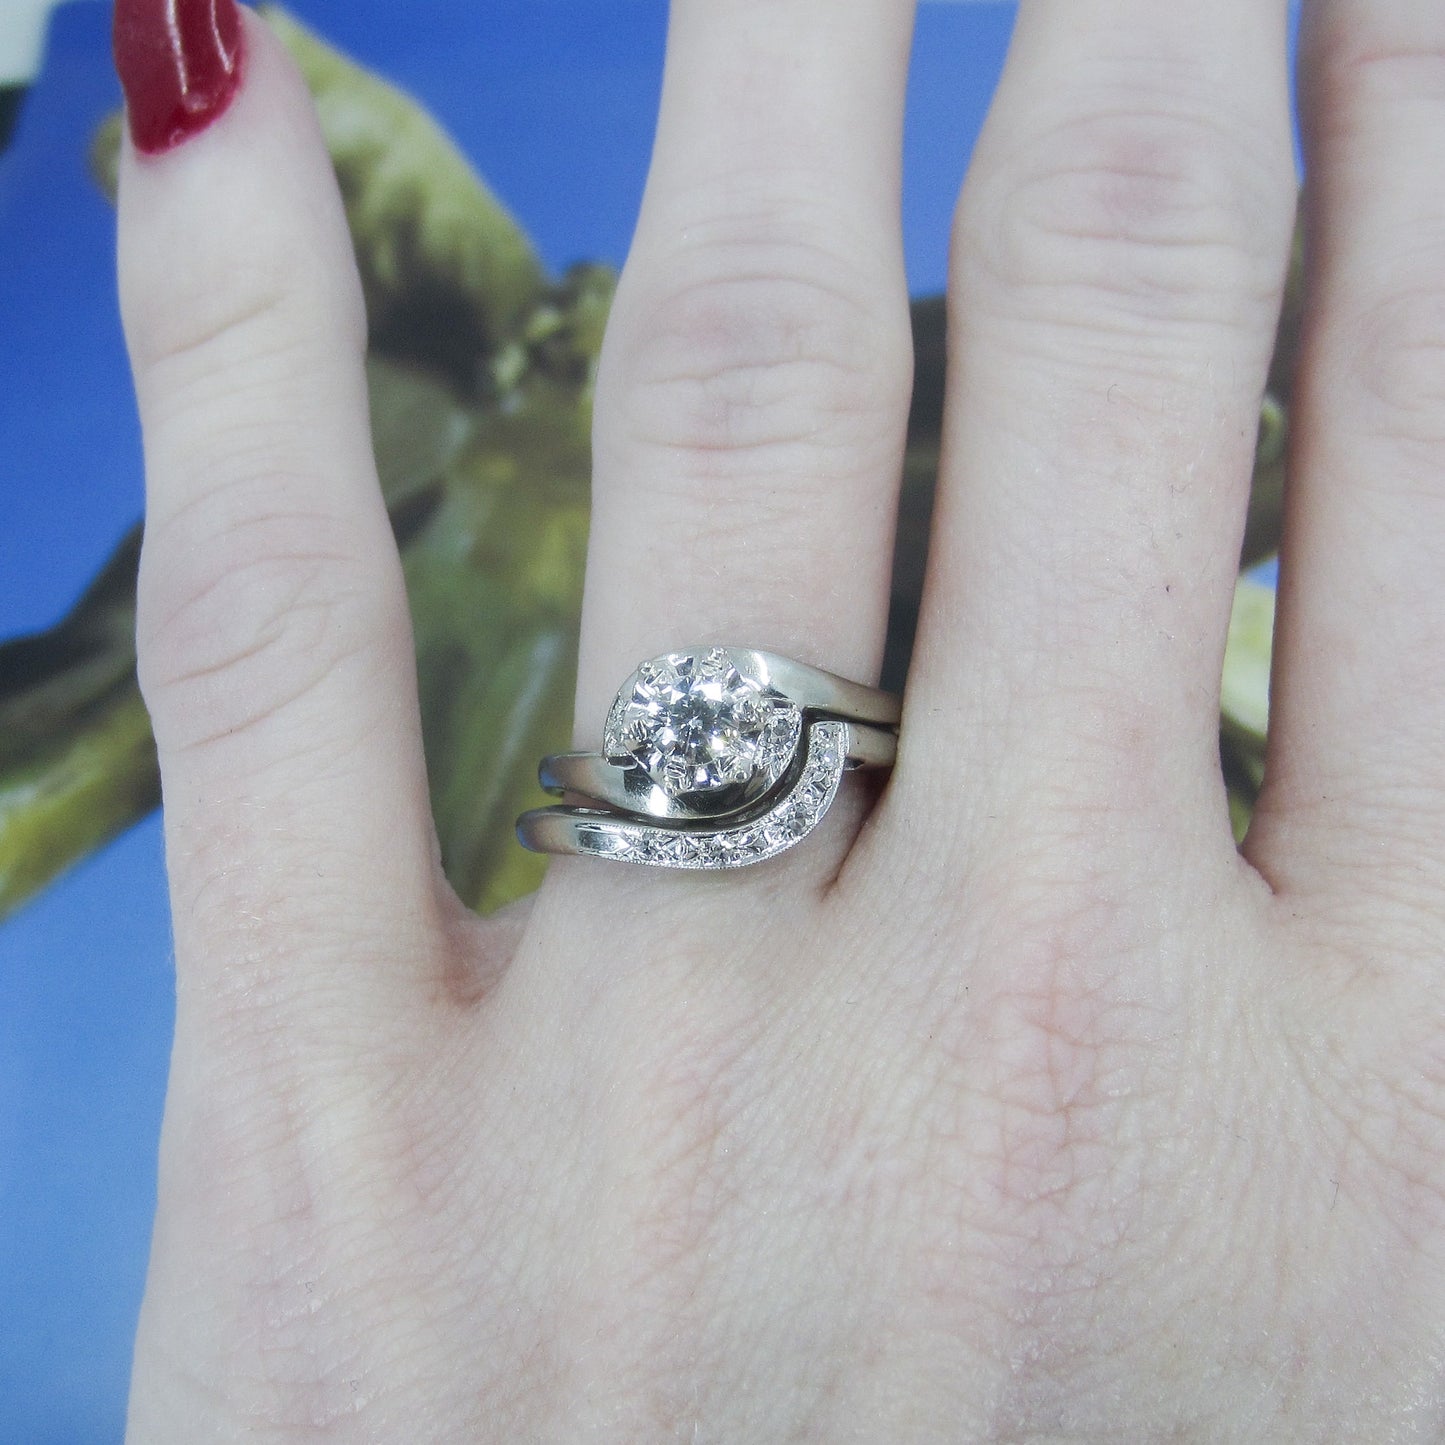 SOLD—MidCentury Diamond Engagement Ring and Wedding Band Set 14k c. 1950